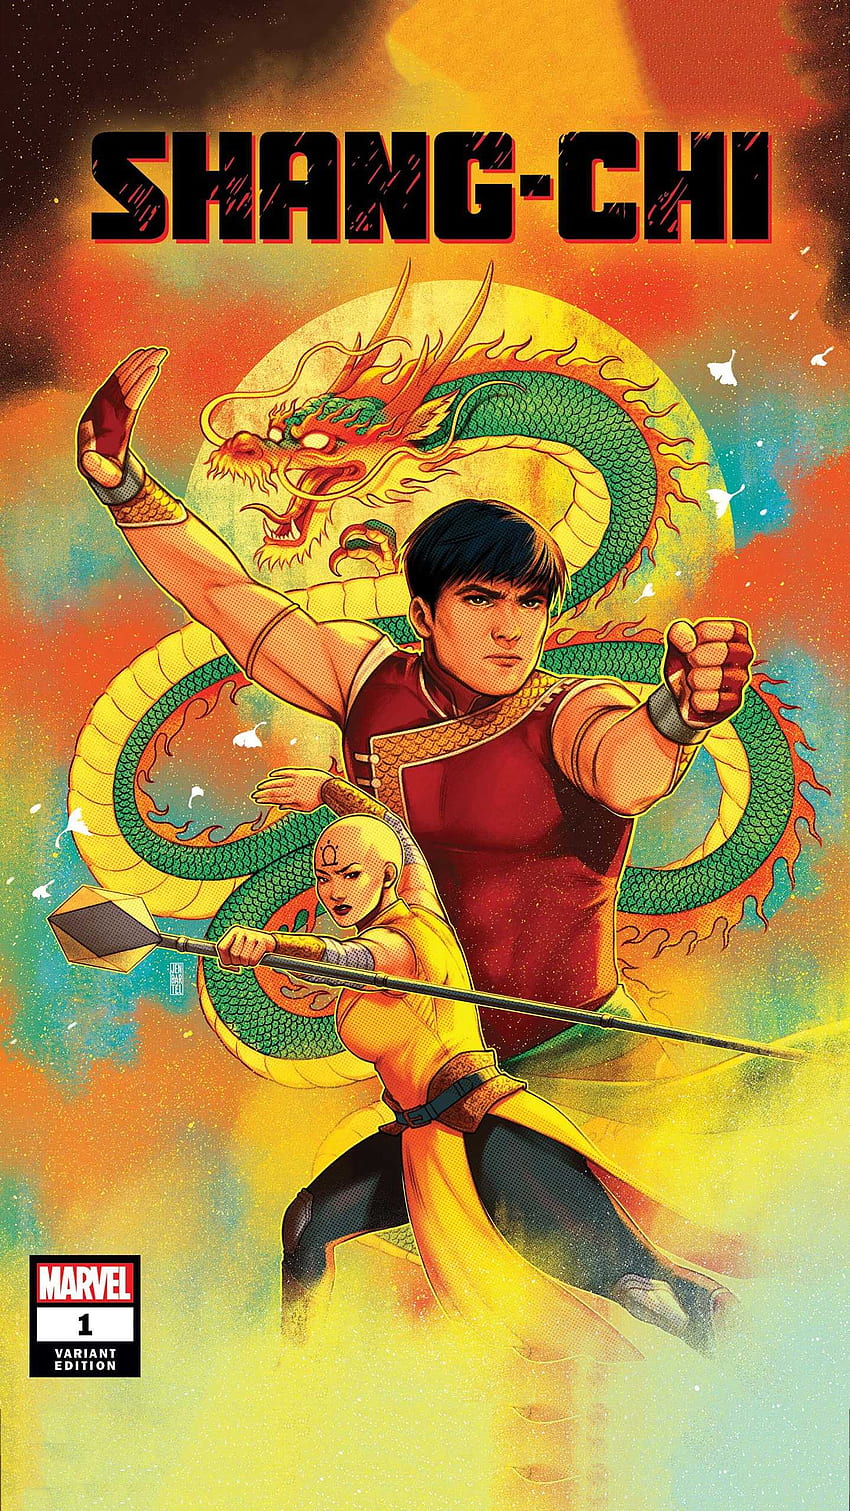 Marvel ShangChi wallpaper by zak2502  Download on ZEDGE  07be